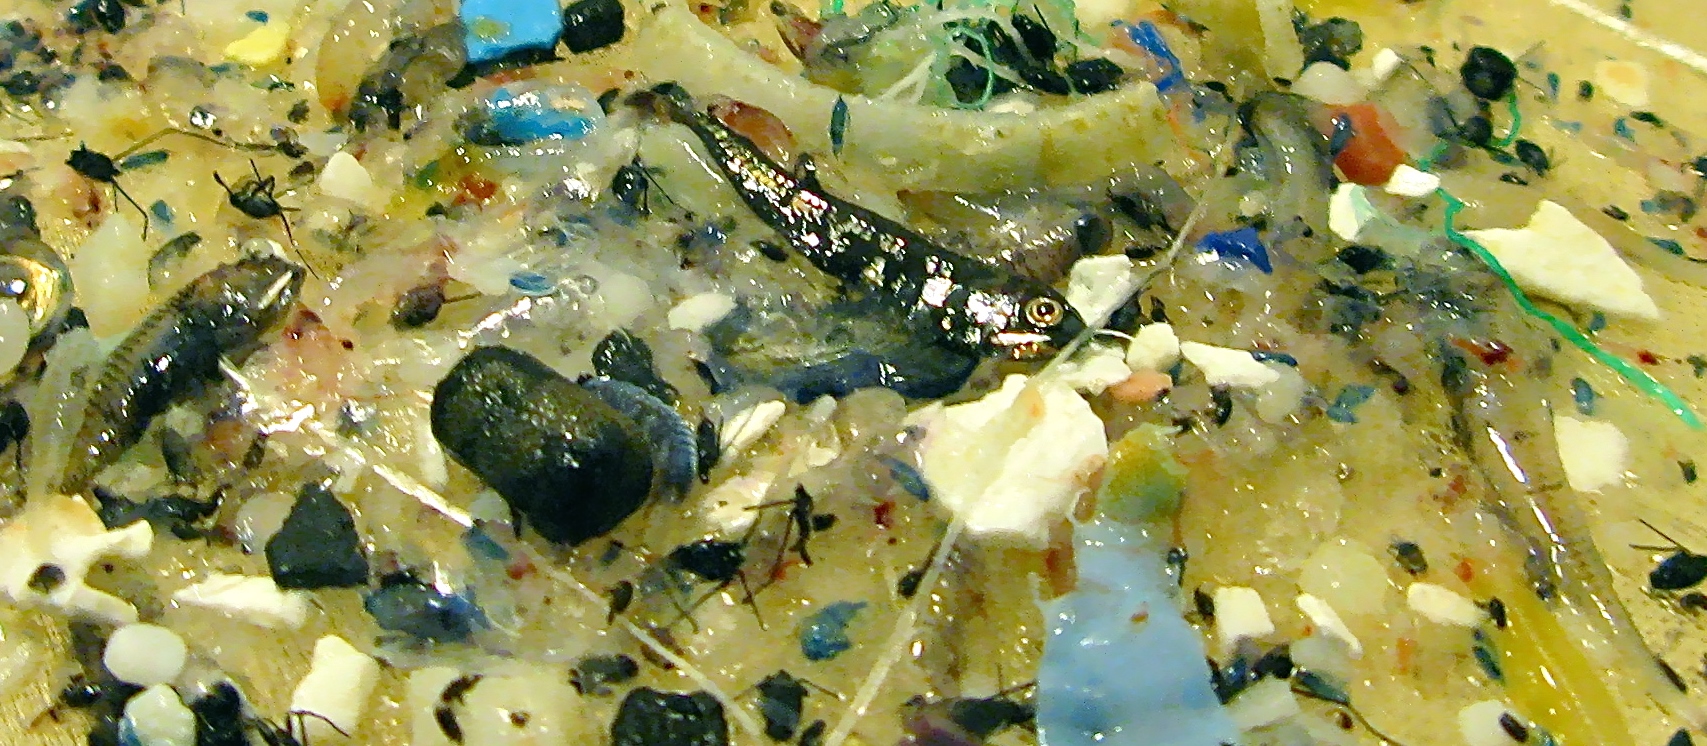 Example of plastics and microplastics